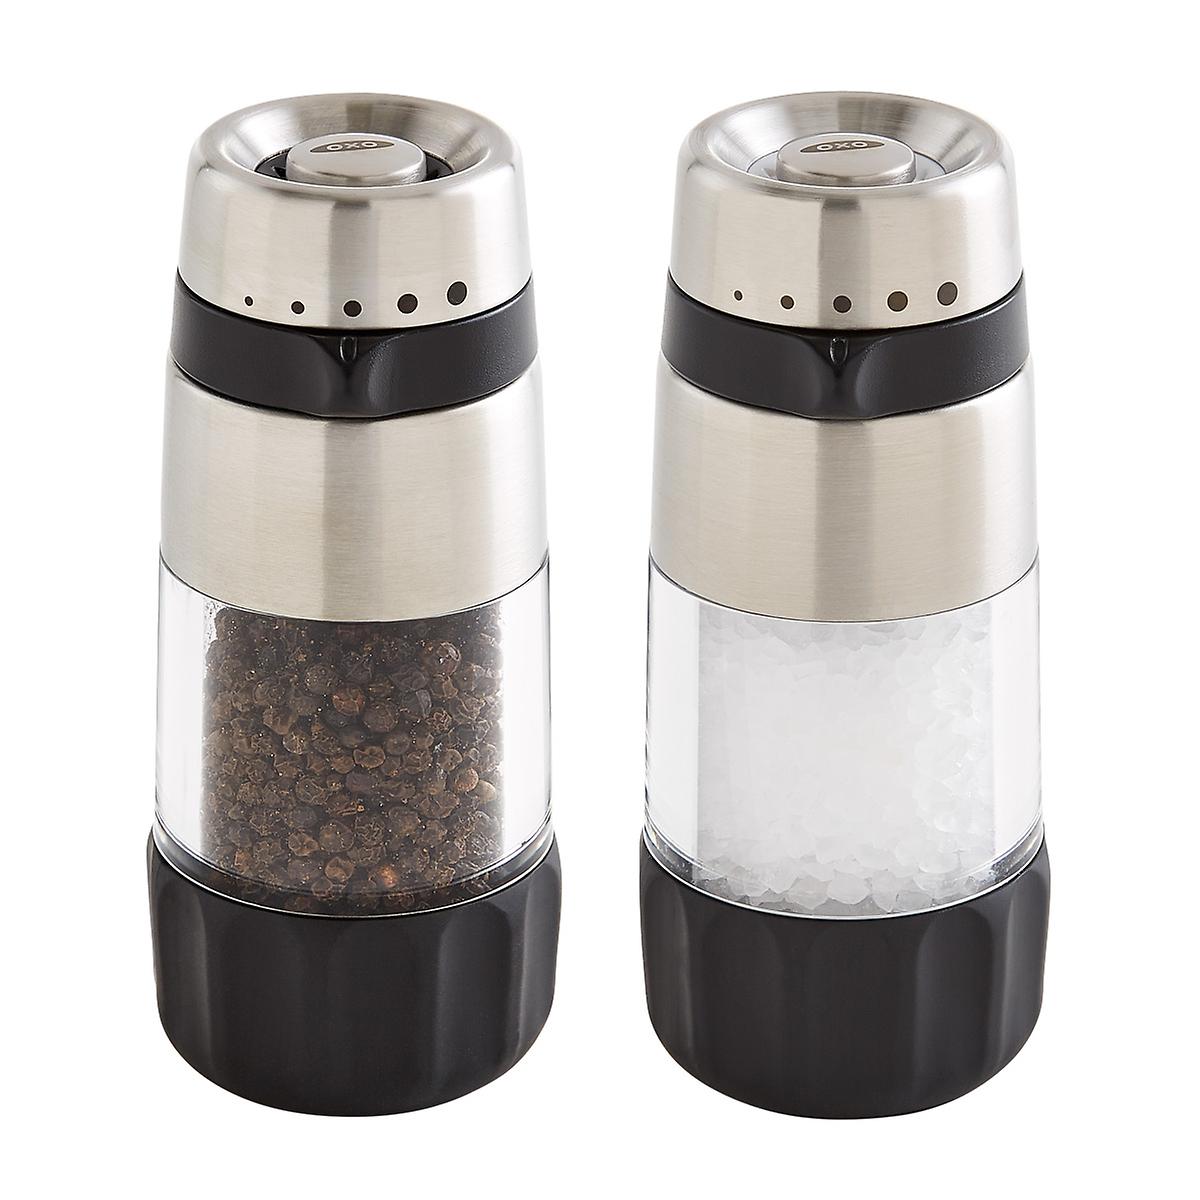 salt and pepper grinders asda